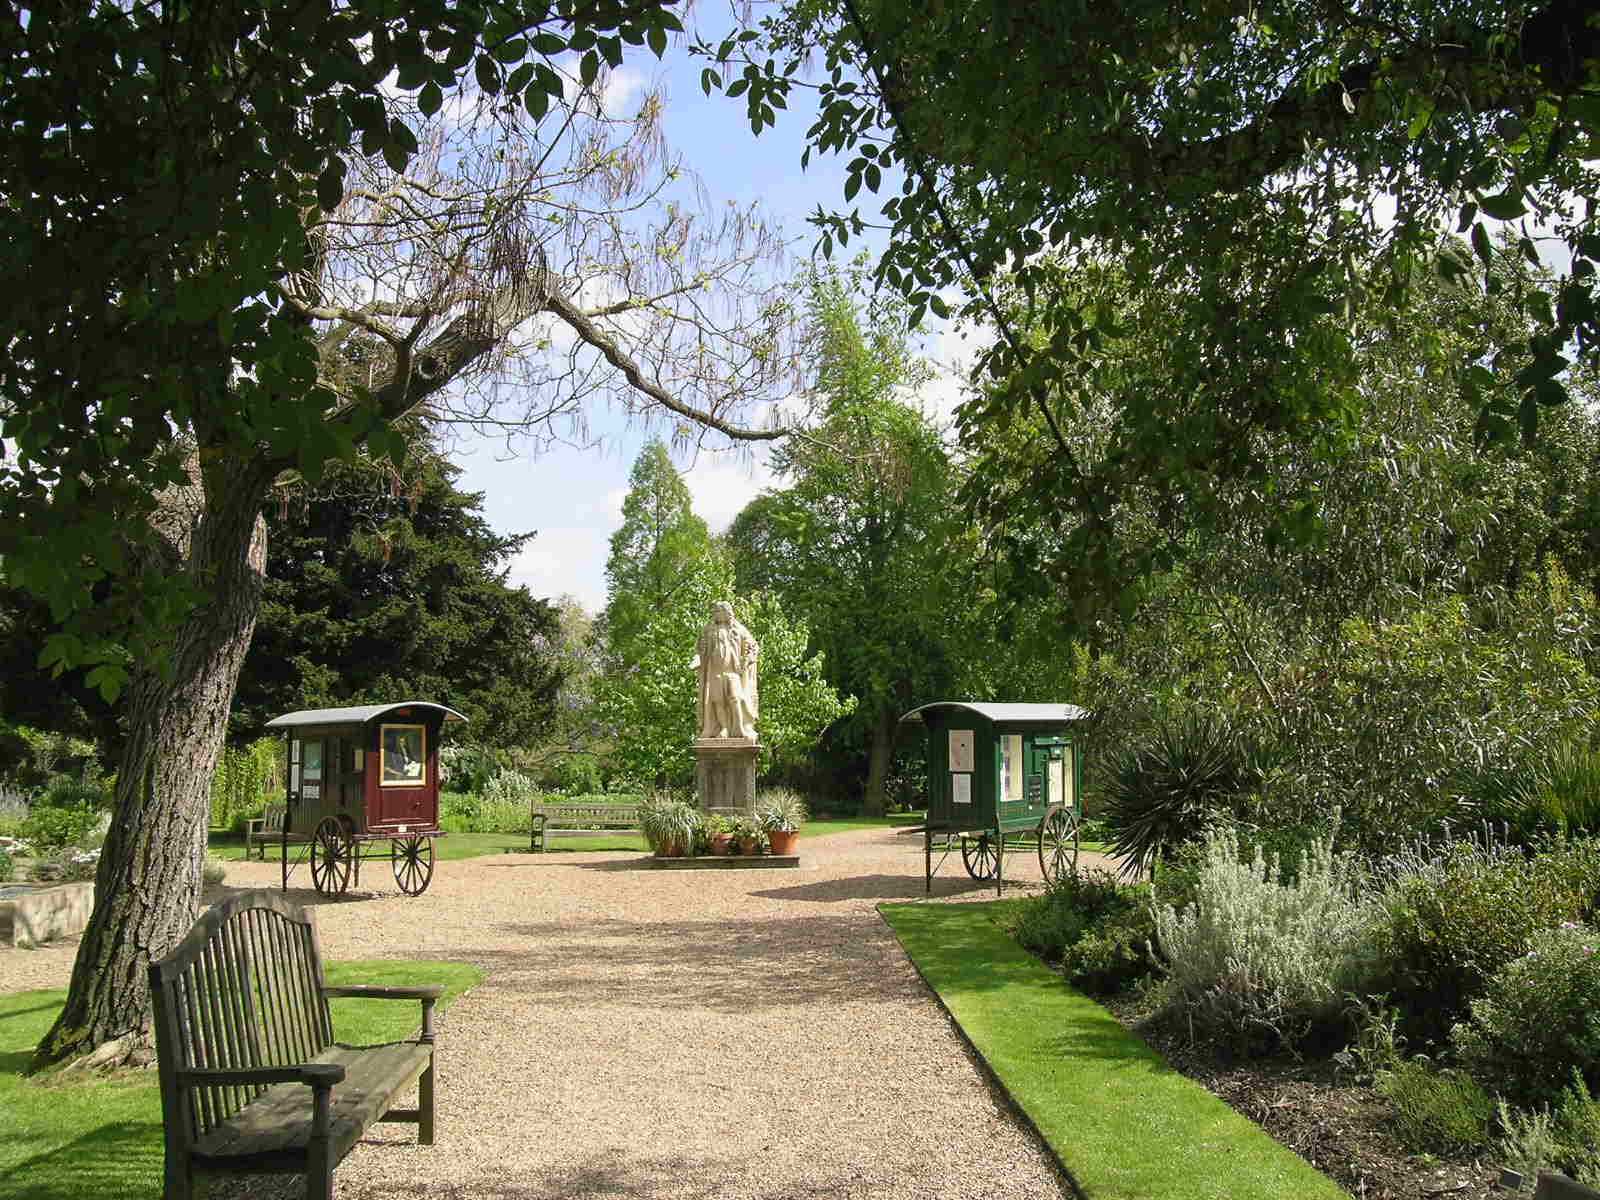 Chelsea Phisyc Garden, Londra